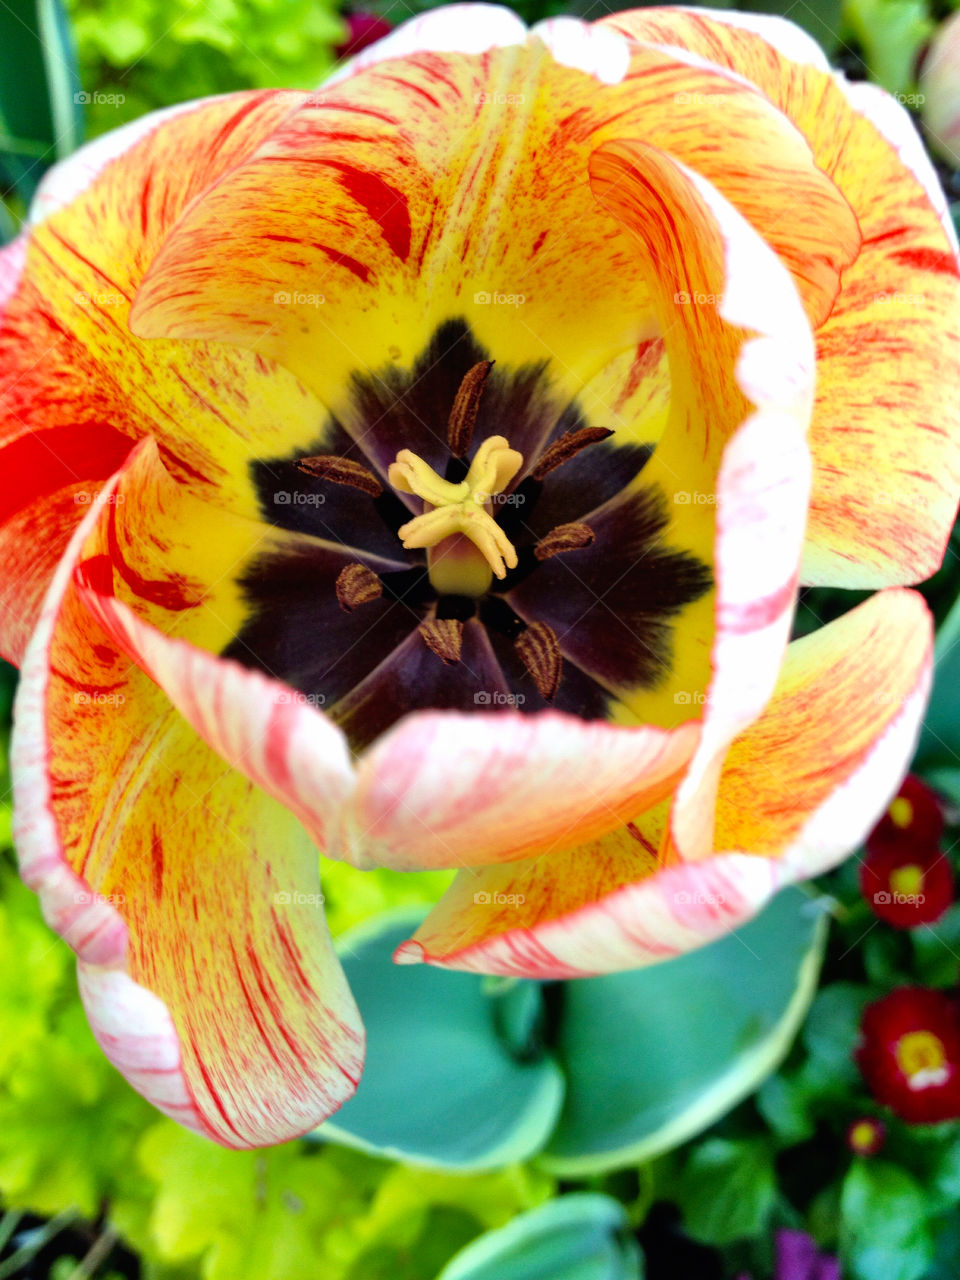 Overhead view of tulip flower